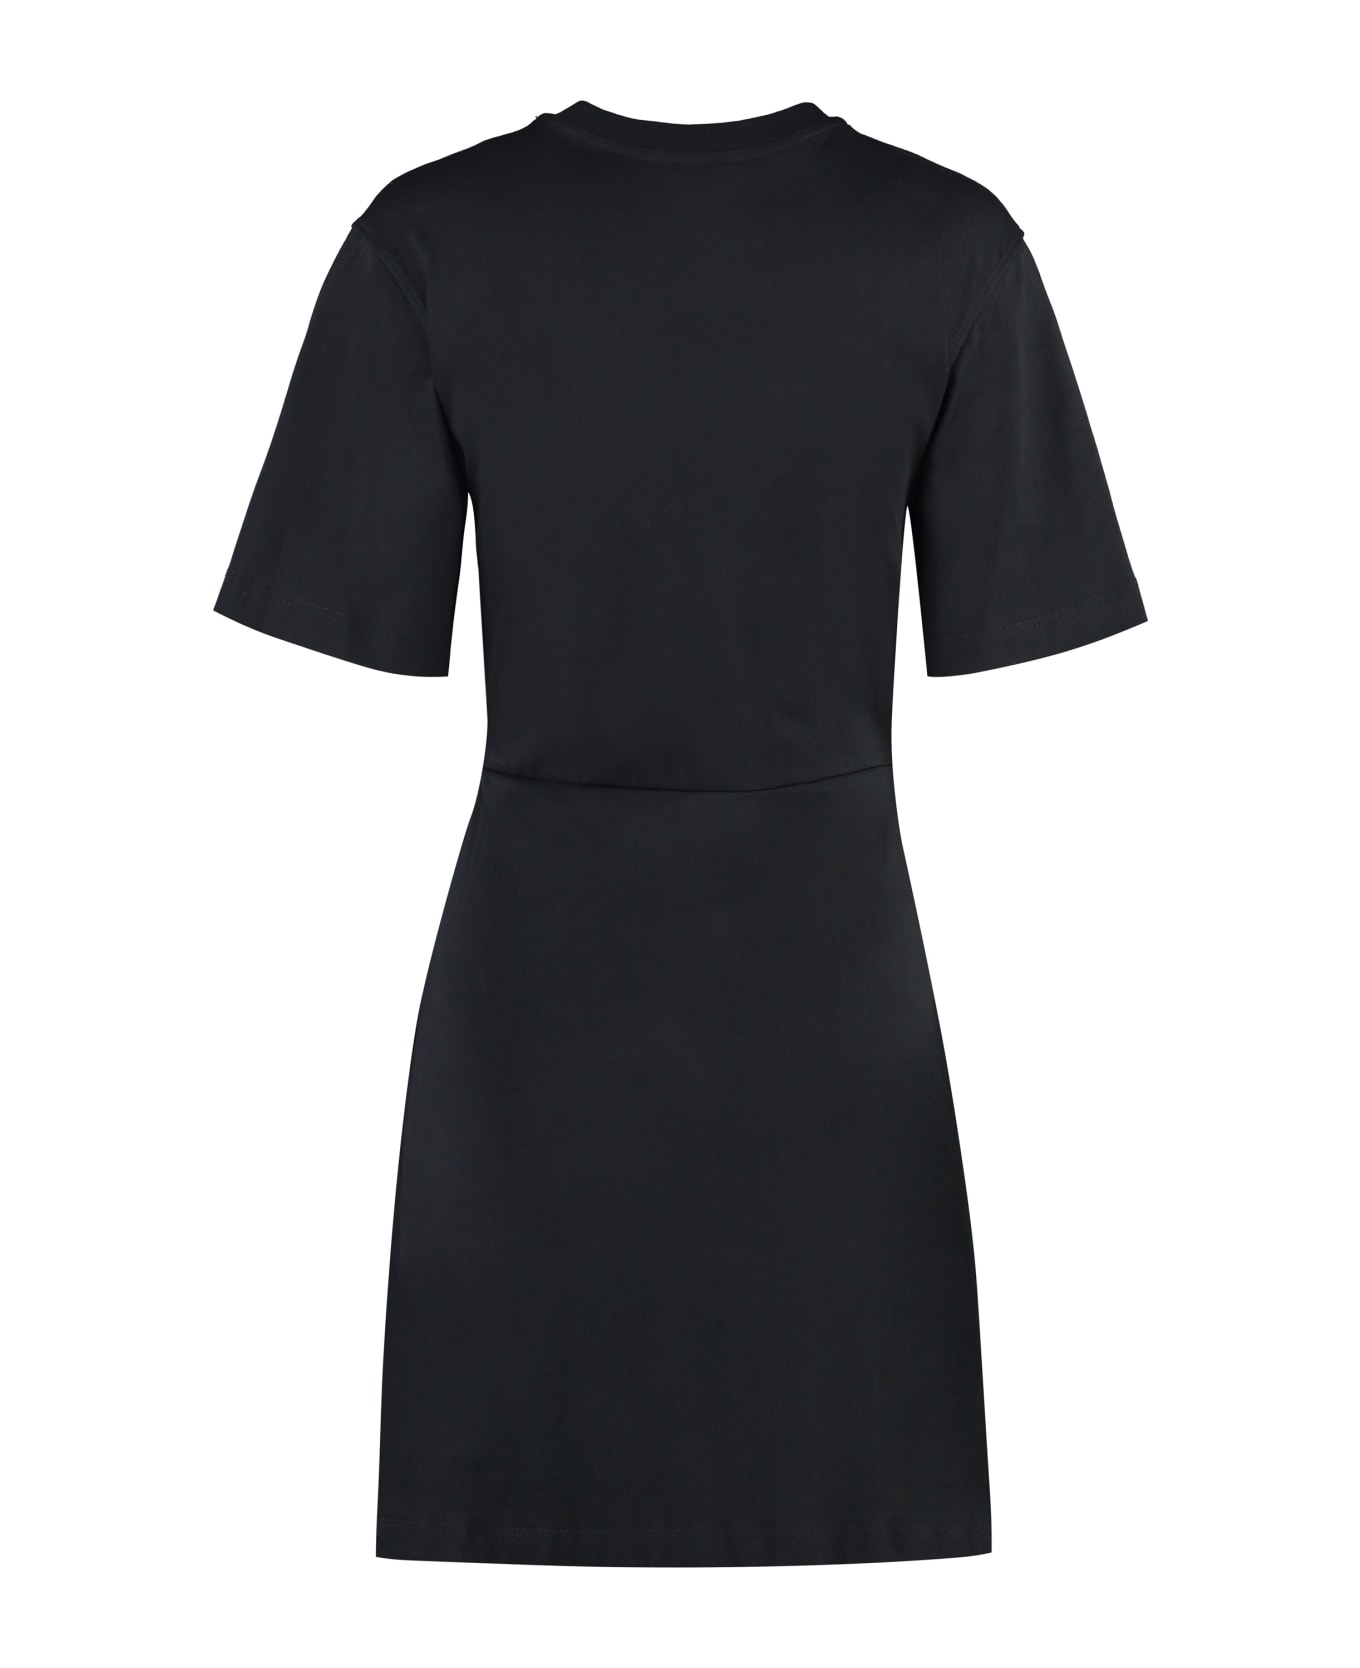 Moschino Cotton Mini-dress - black